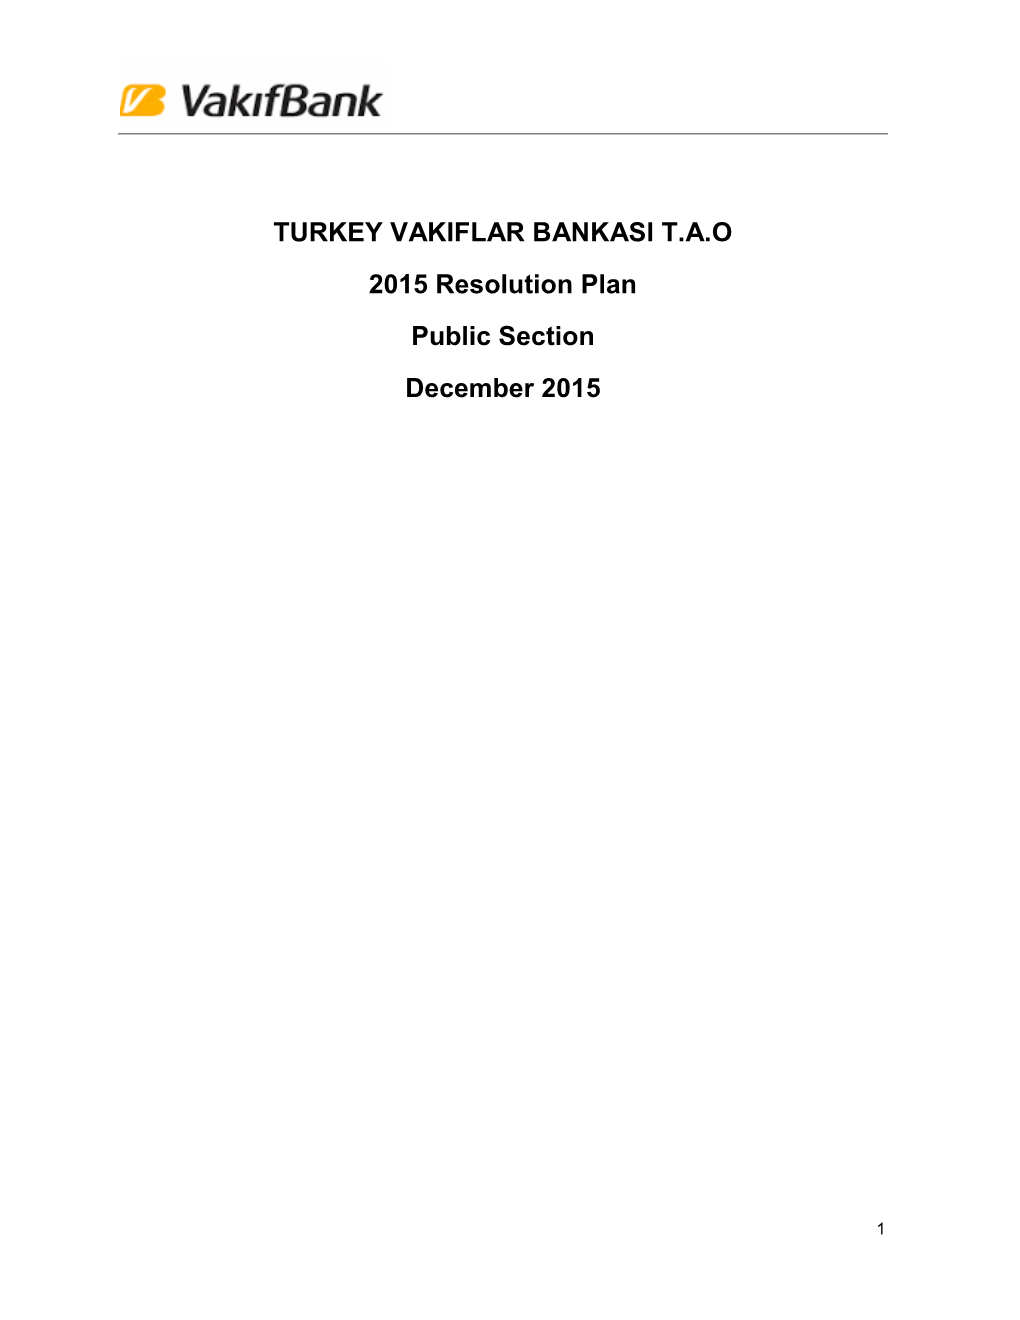 TURKEY VAKIFLAR BANKASI T.A.O 2015 Resolution Plan Public Section December 2015